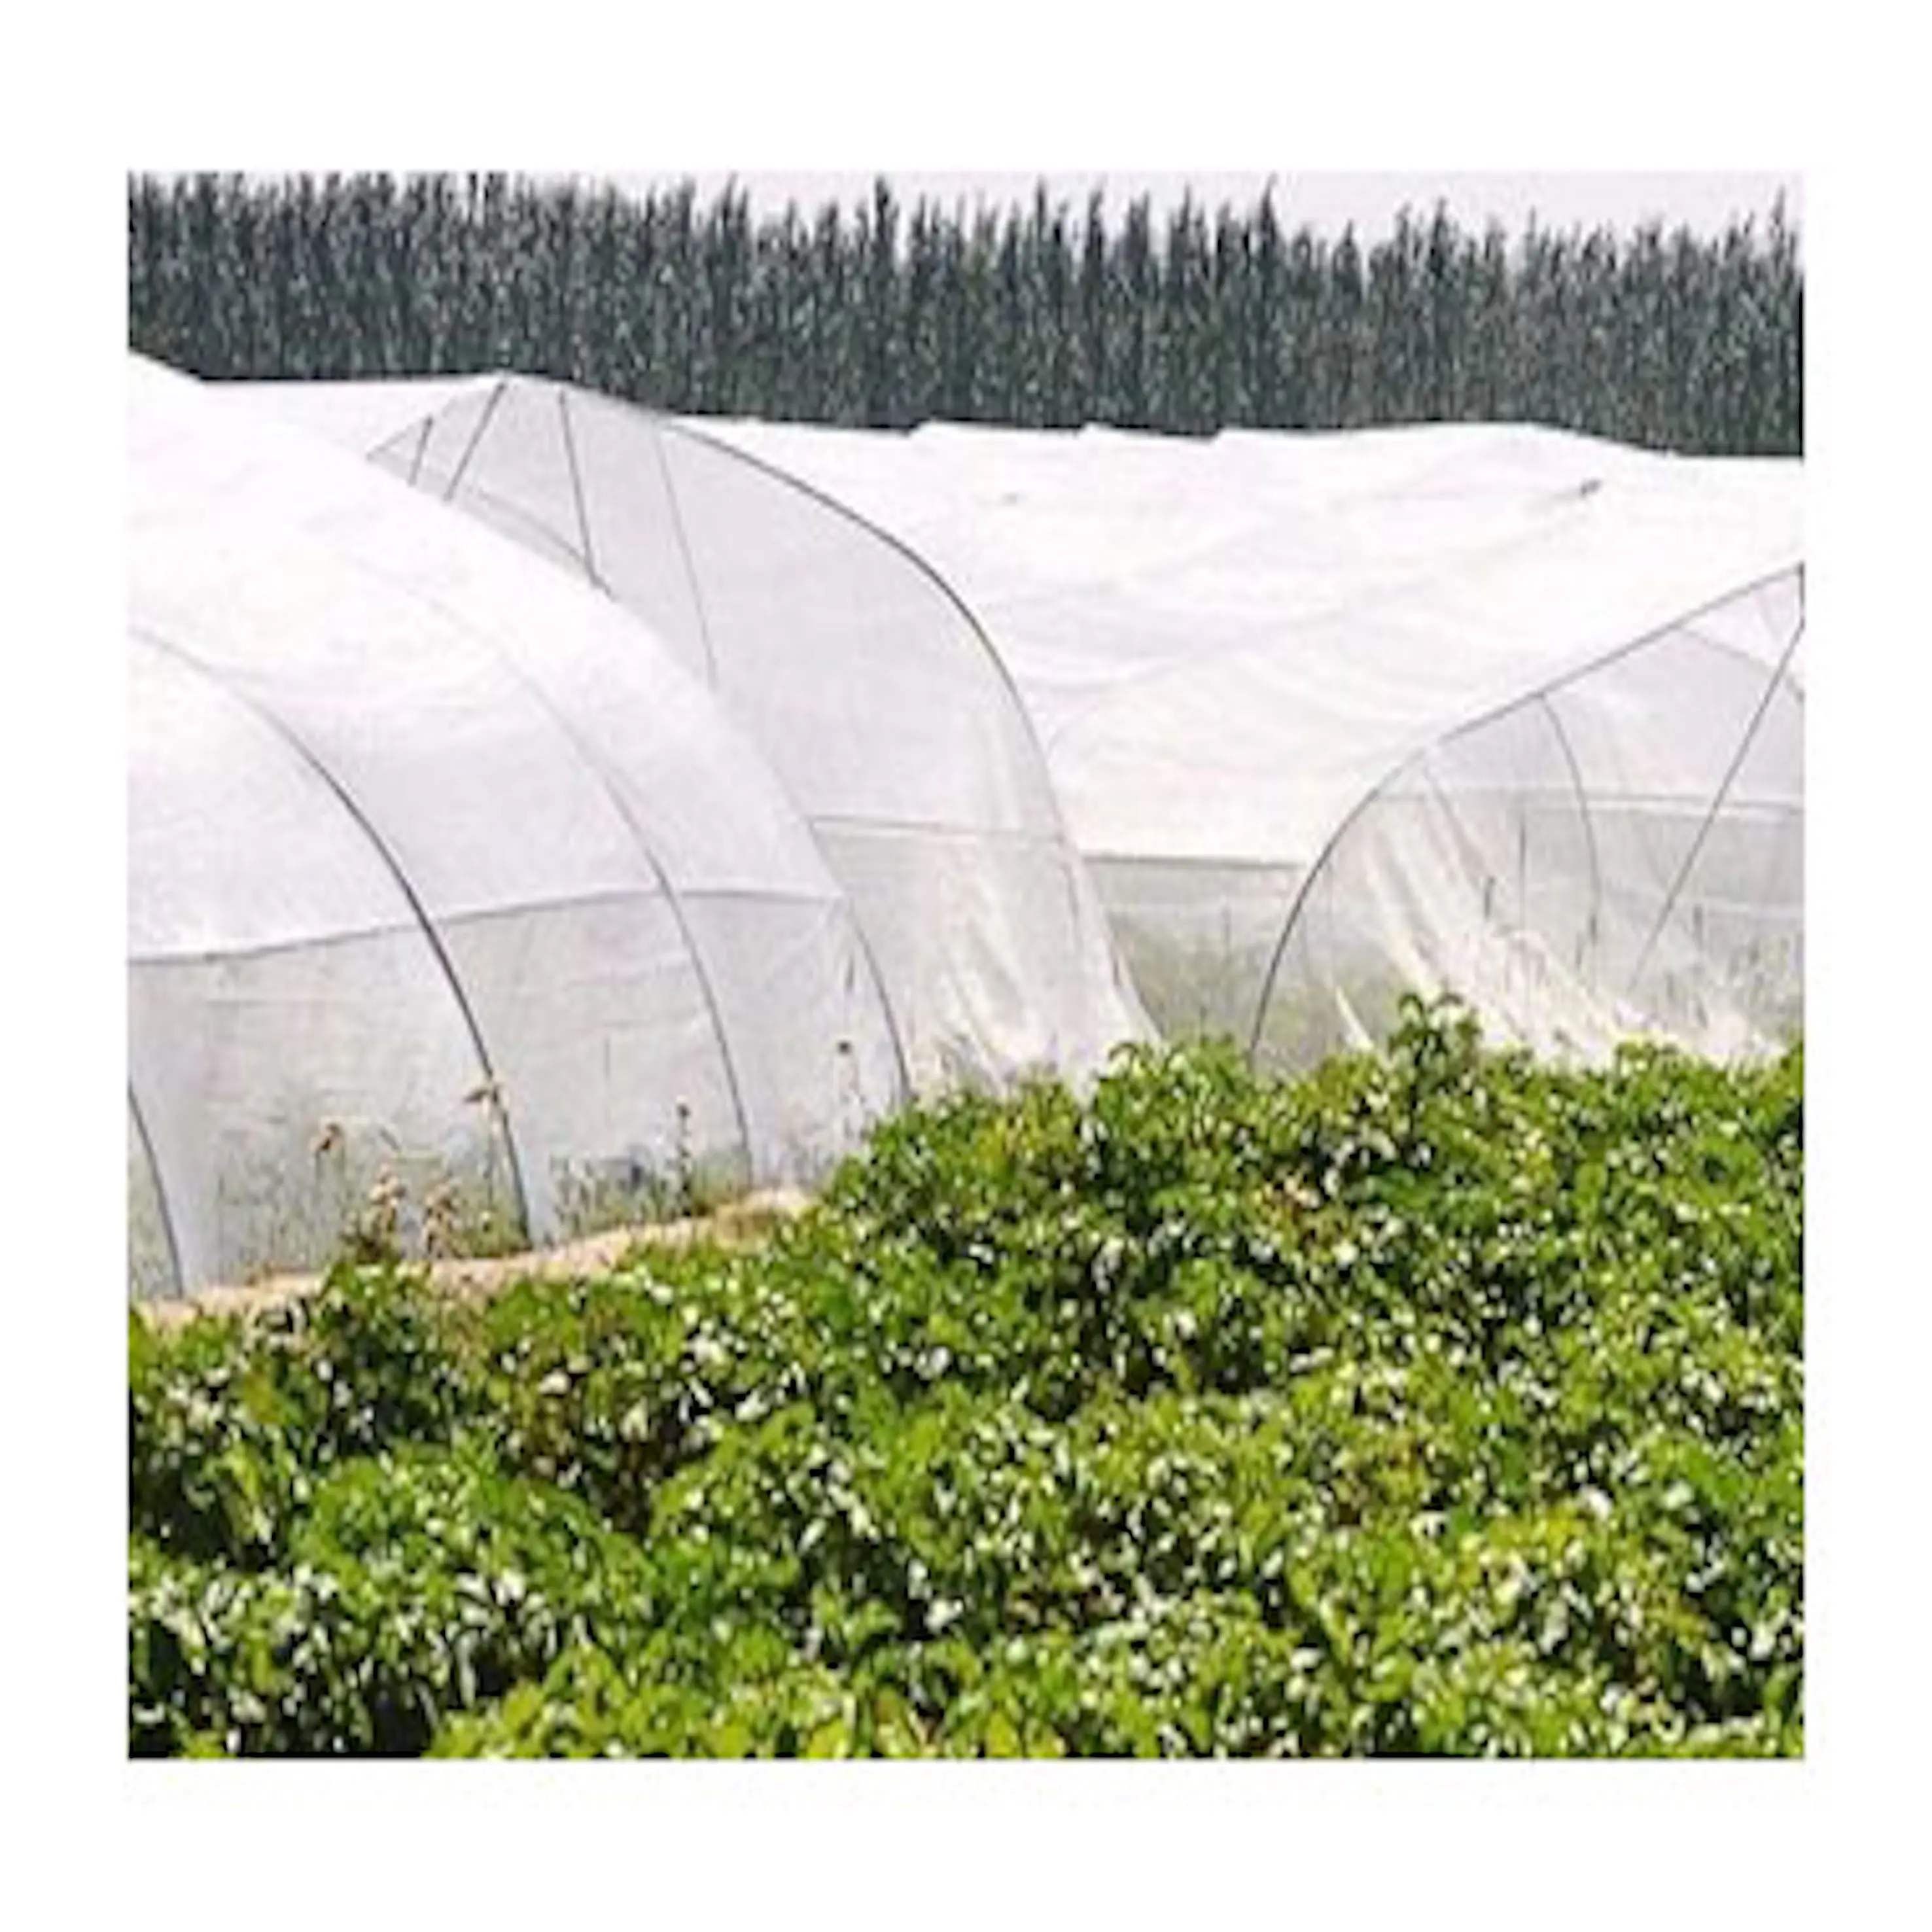 Multiwarna Grosir Jaring Anti Serangga Jaring Pertanian Perlindungan Buah/Jaring Anti Serangga Pertanian untuk Tanaman Sayur